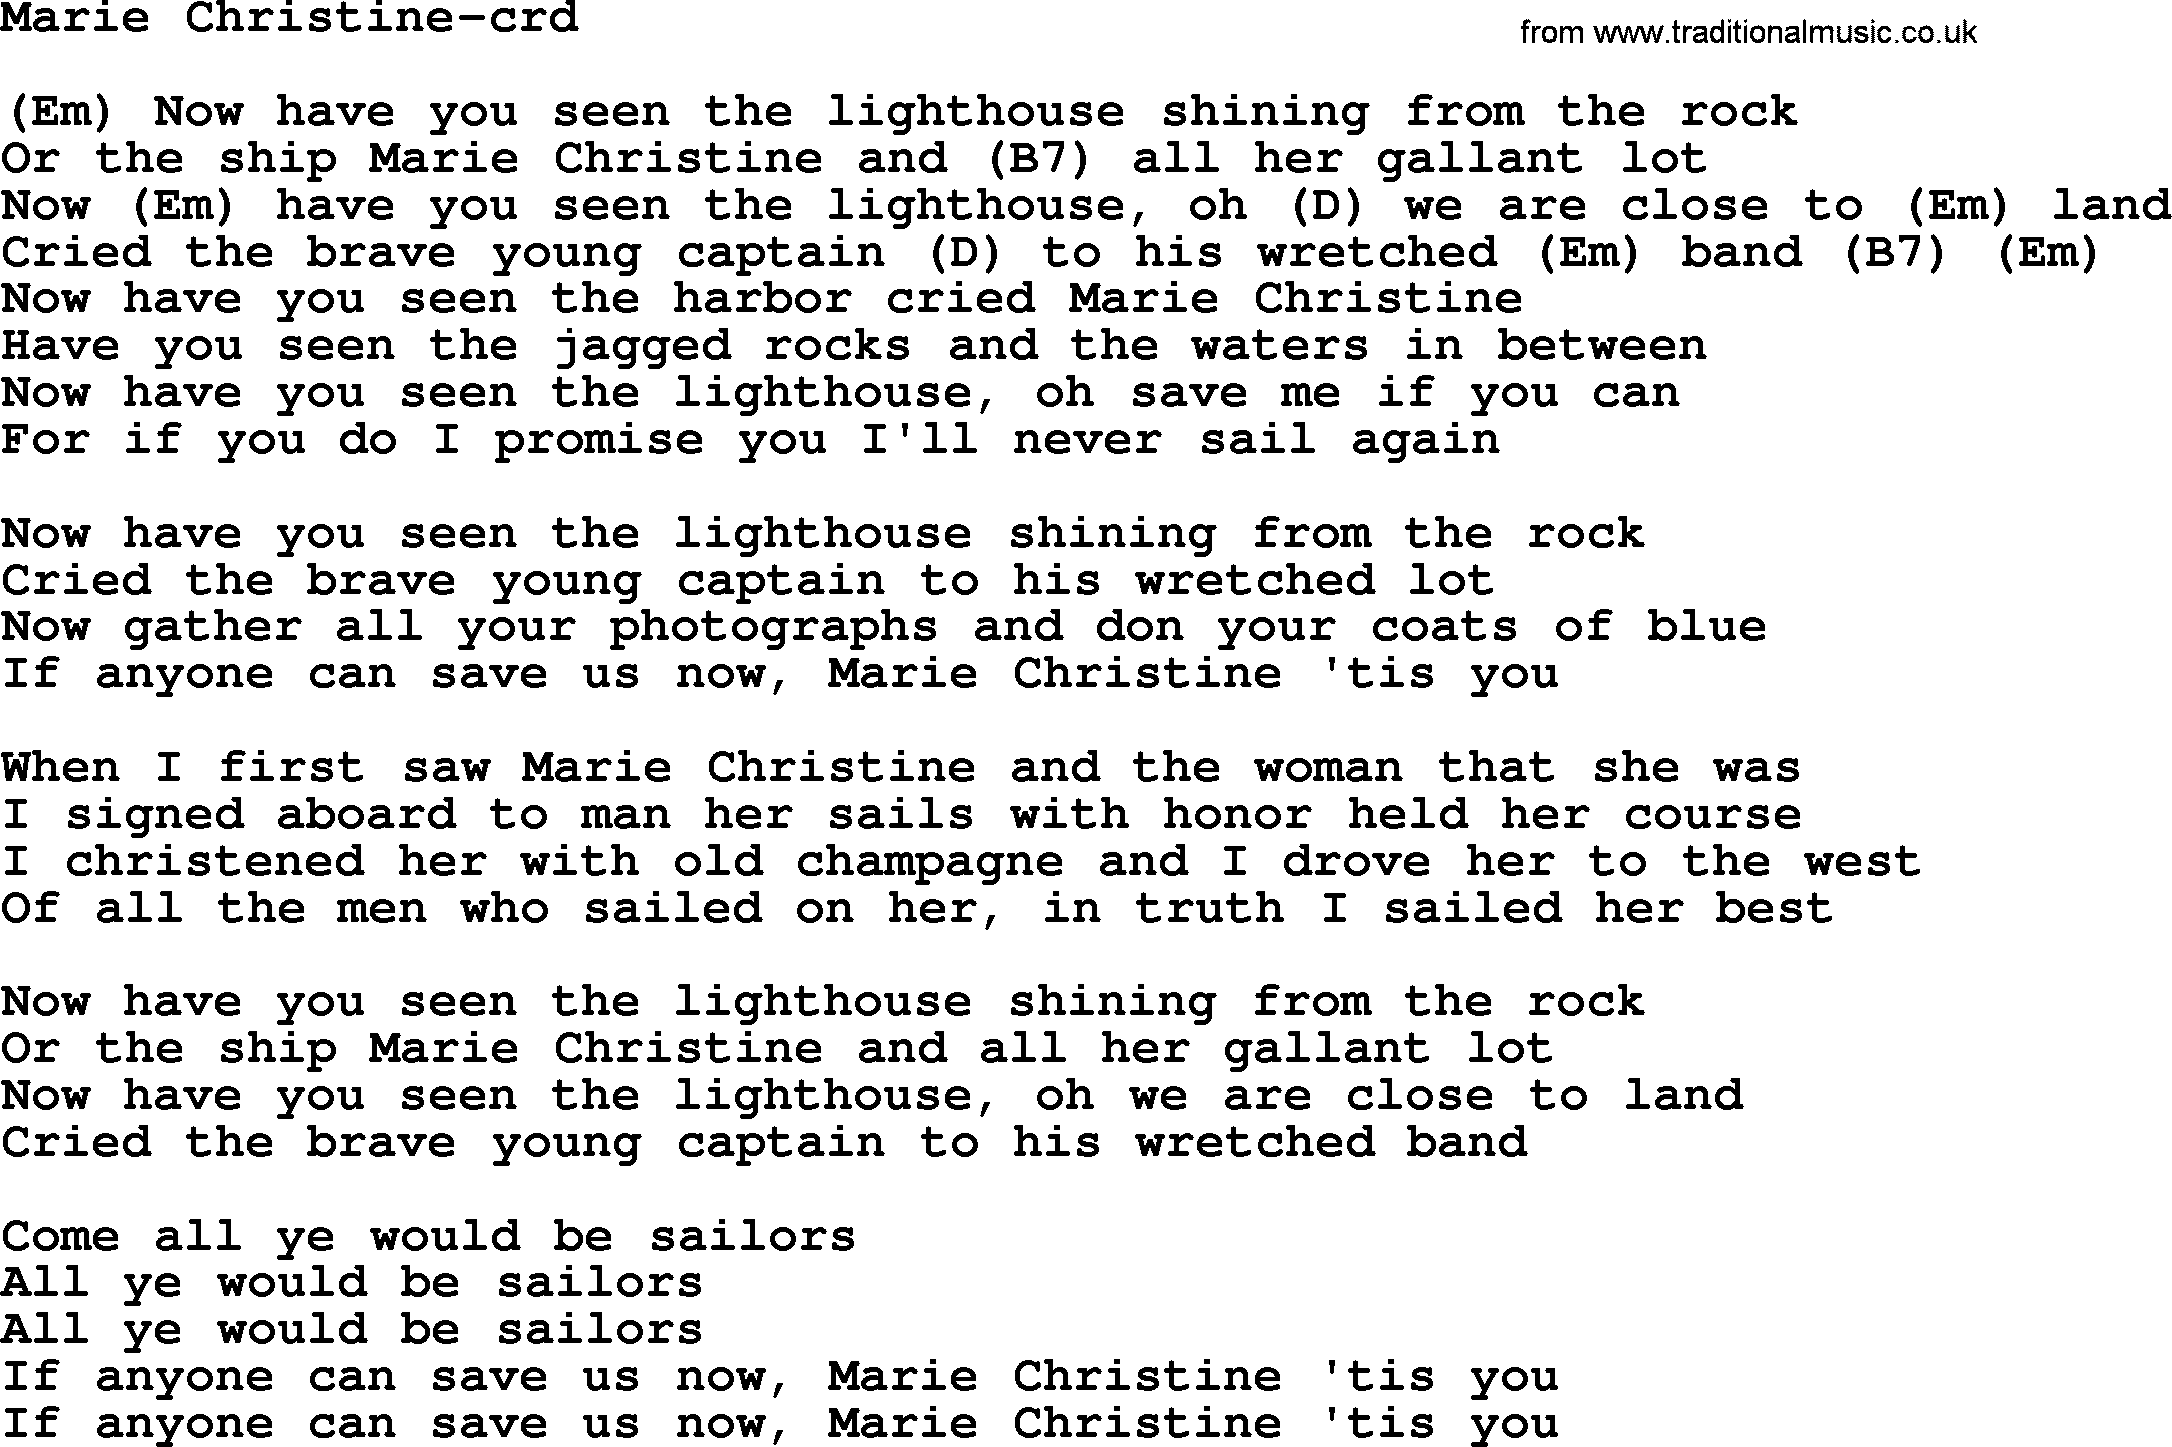 Gordon Lightfoot song Marie Christine, lyrics and chords